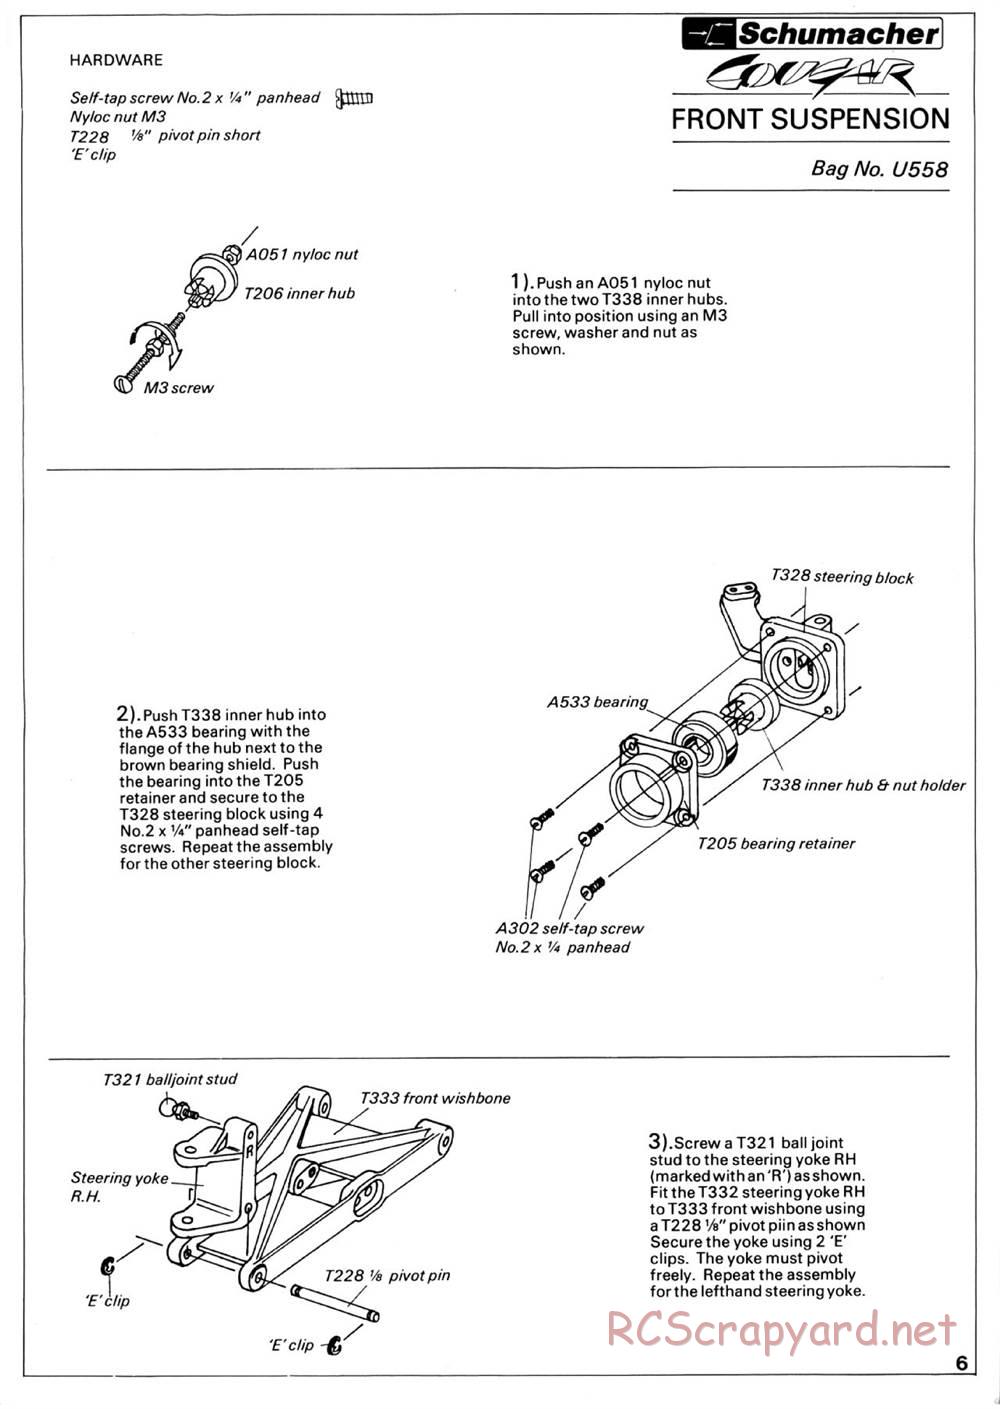 Schumacher - Cougar - Manual - Page 7